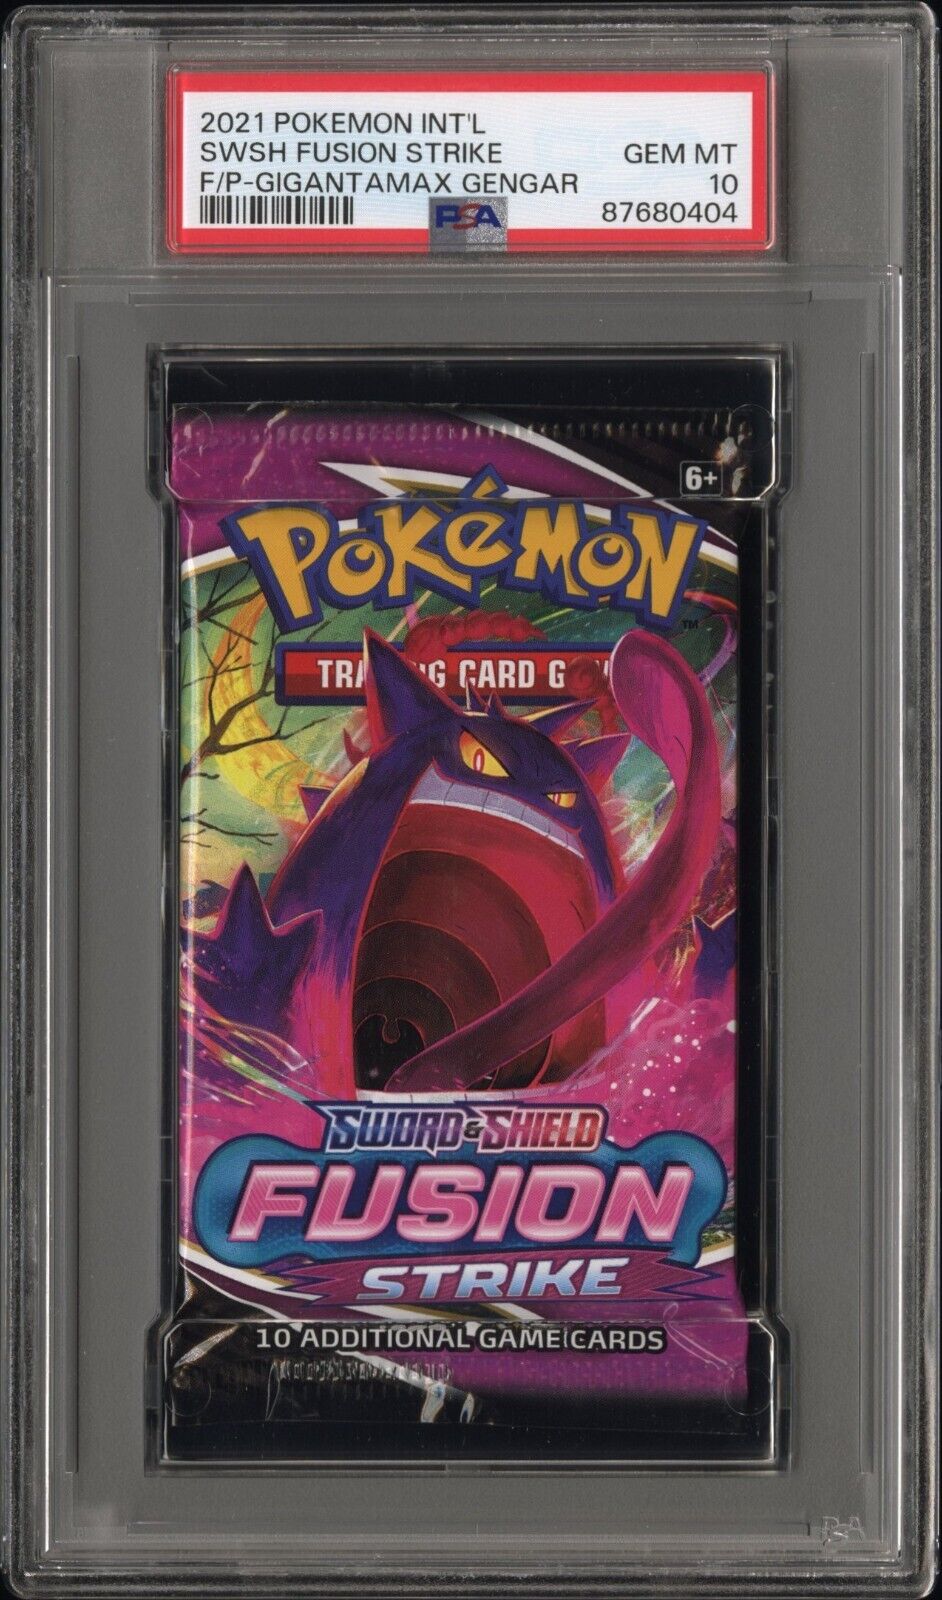 2021 Pokemon SWSH Fusion Strike Gengar Foil / Booster Pack GEM MINT PSA 10